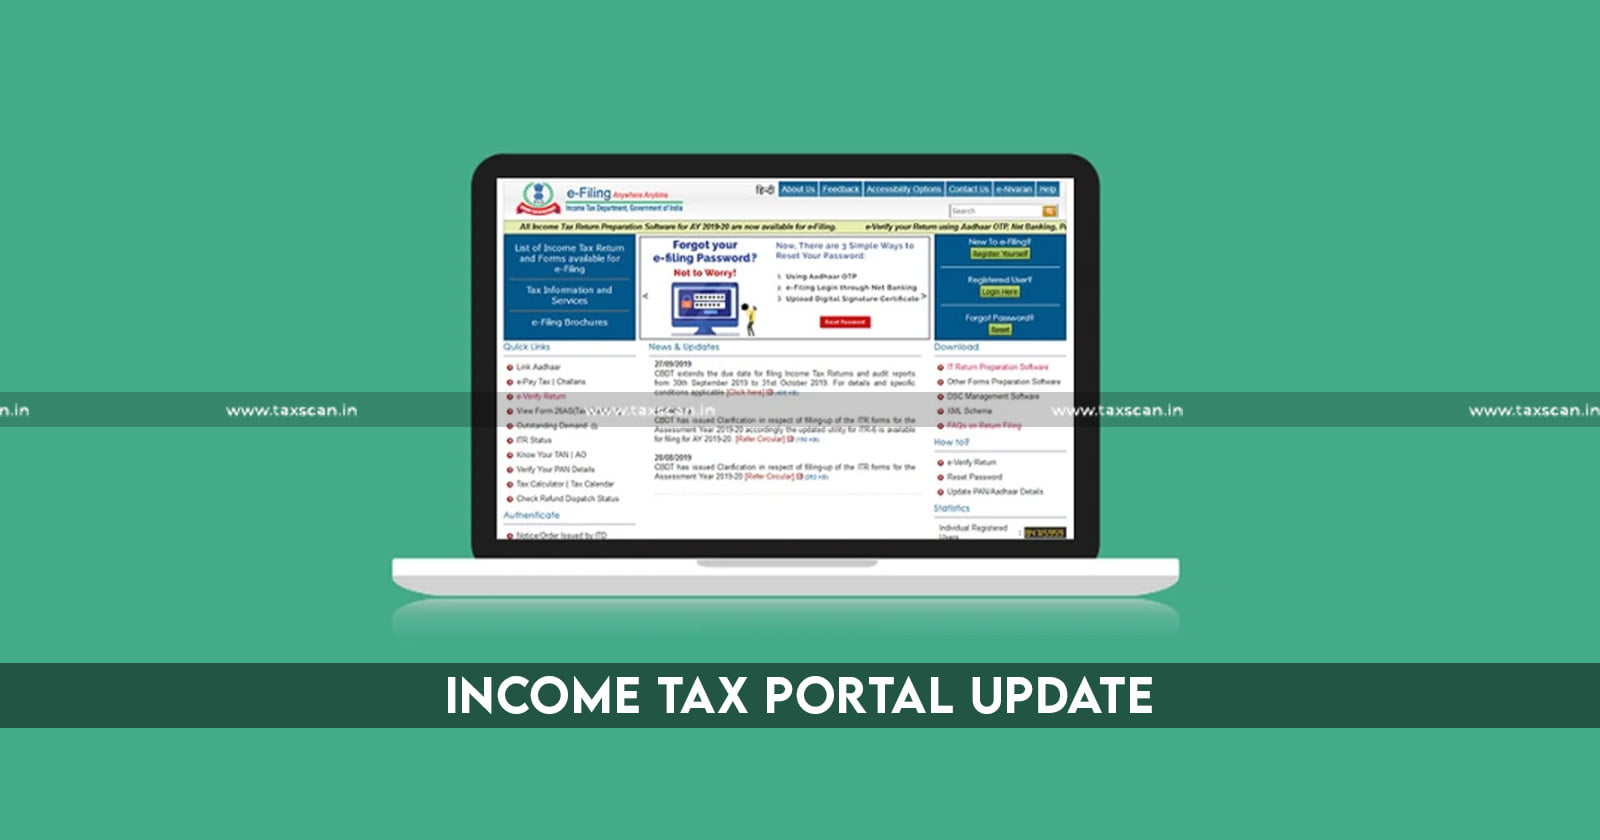 Income Tax Portal Update - CBDT - Direct Access to AIS - AIS - Direct Access - taxscan